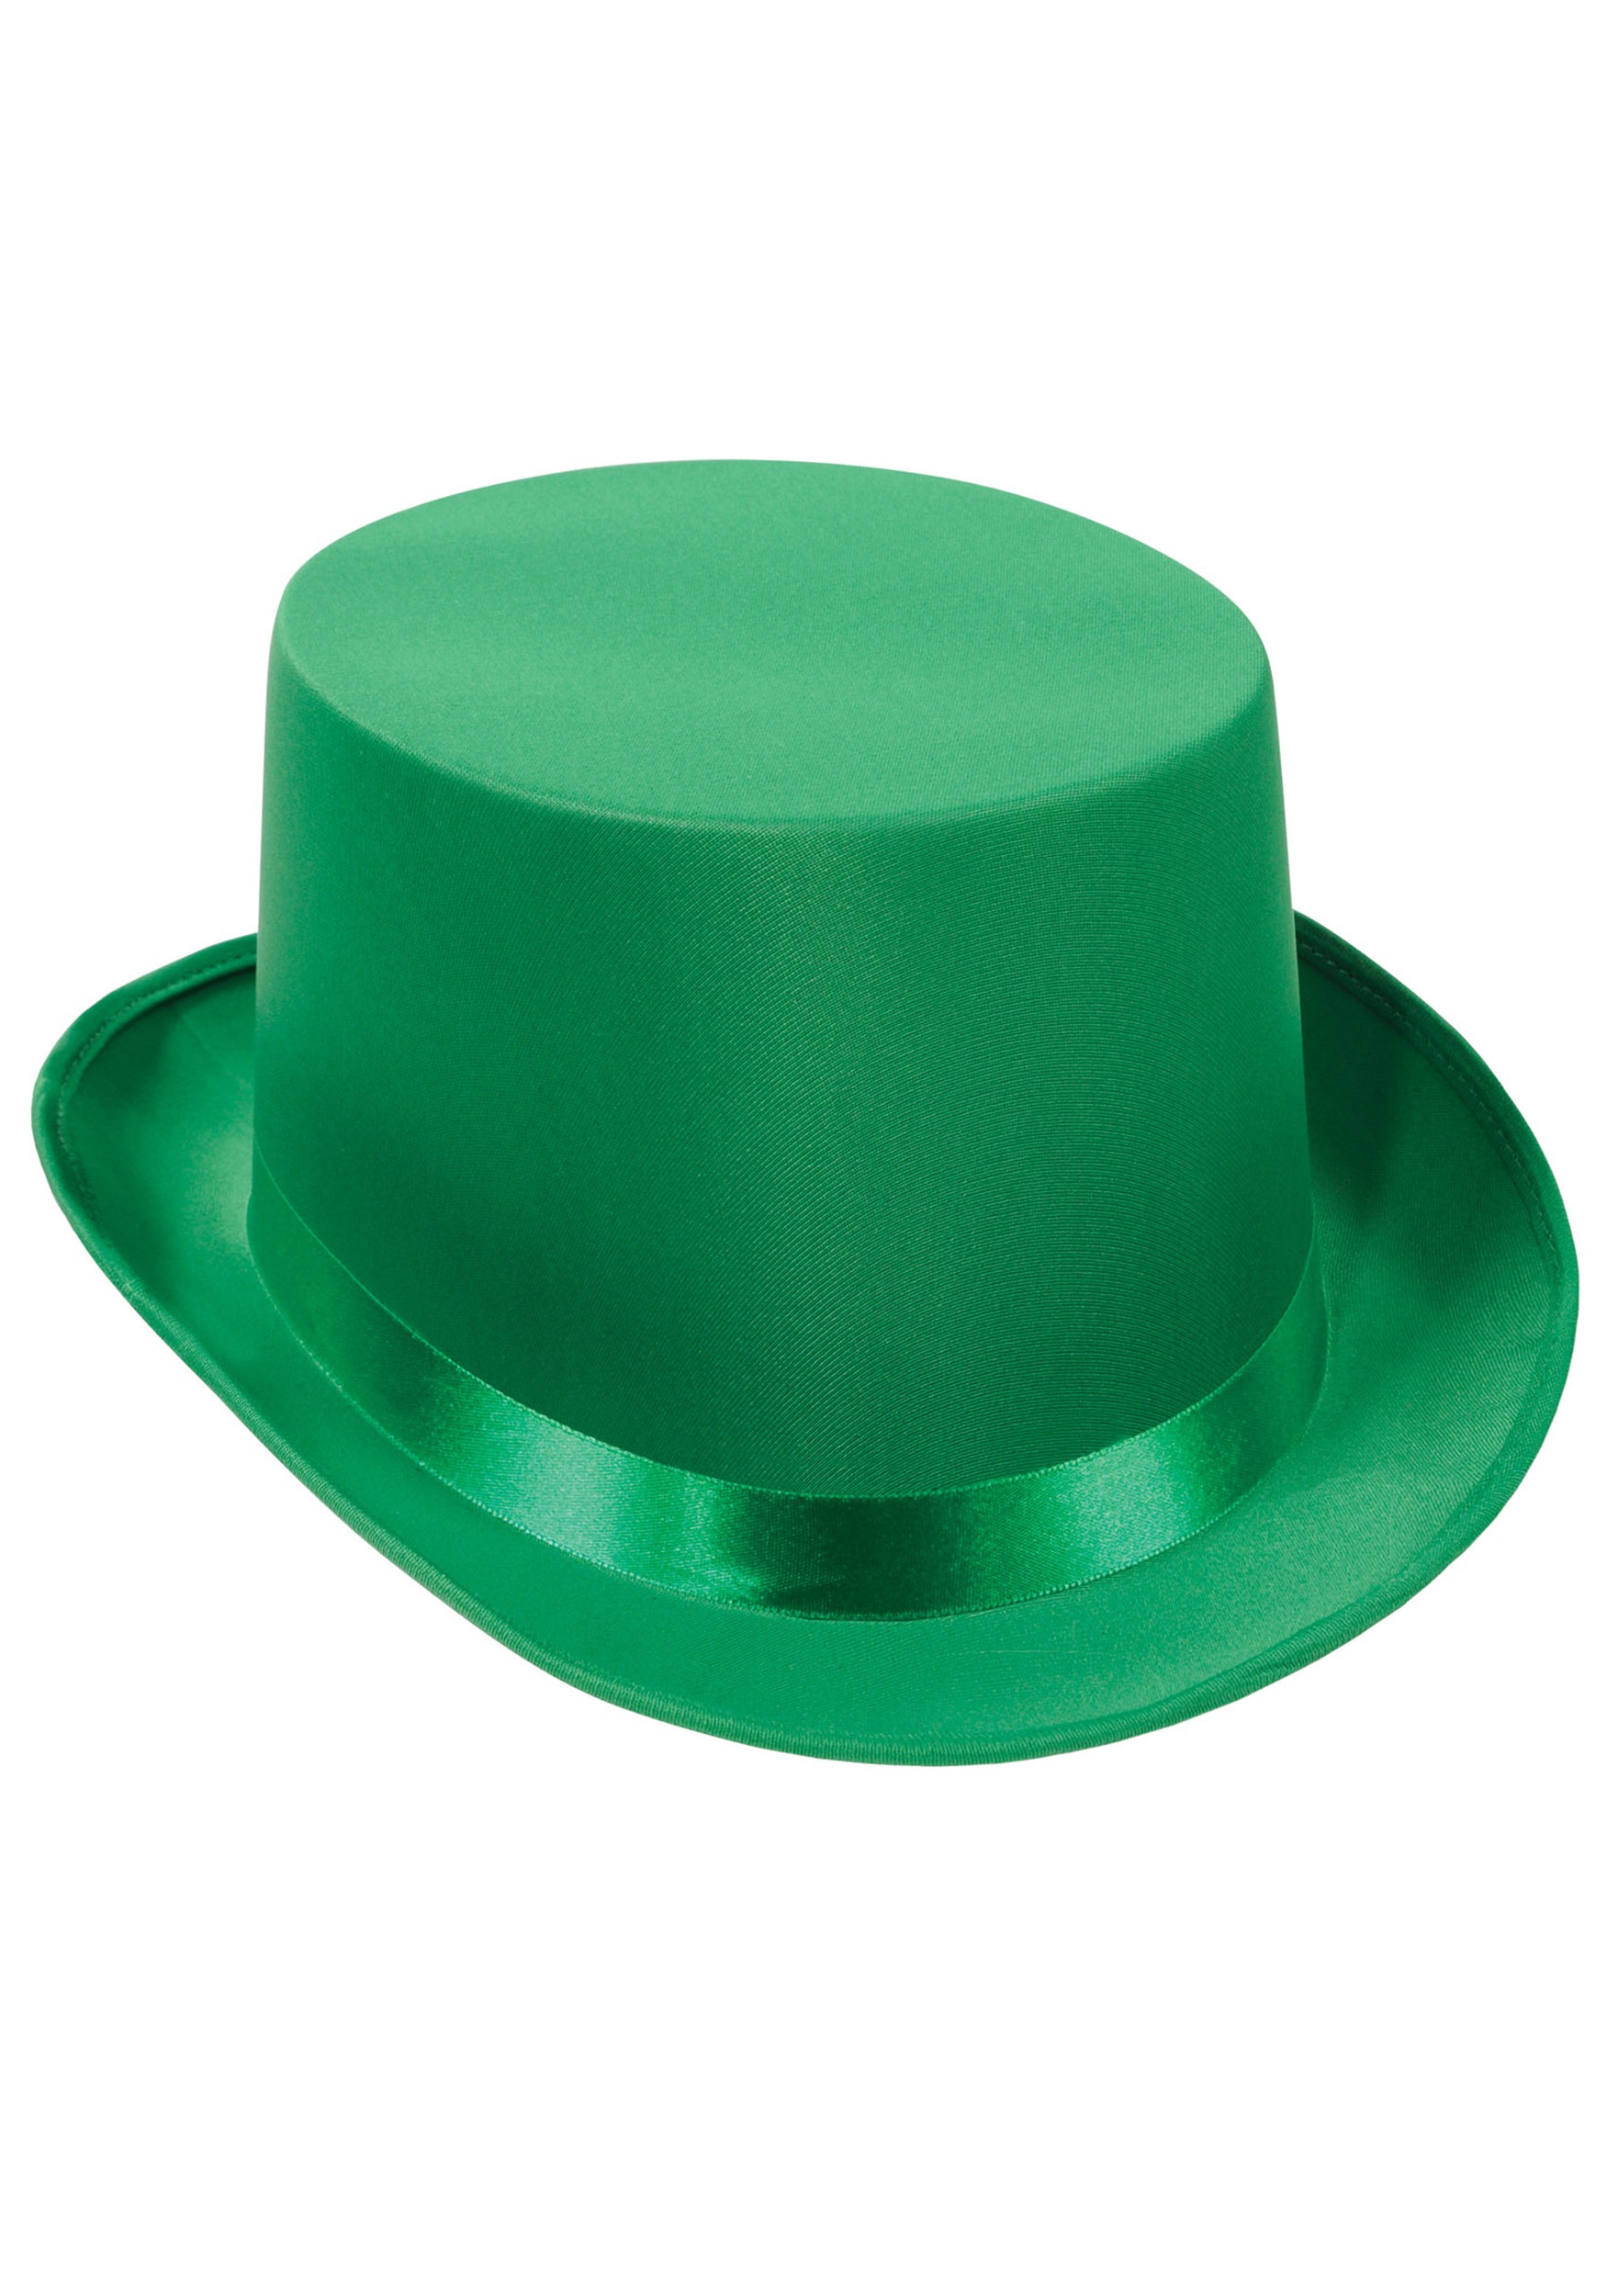 Beistle Green Top Hat Green Standard